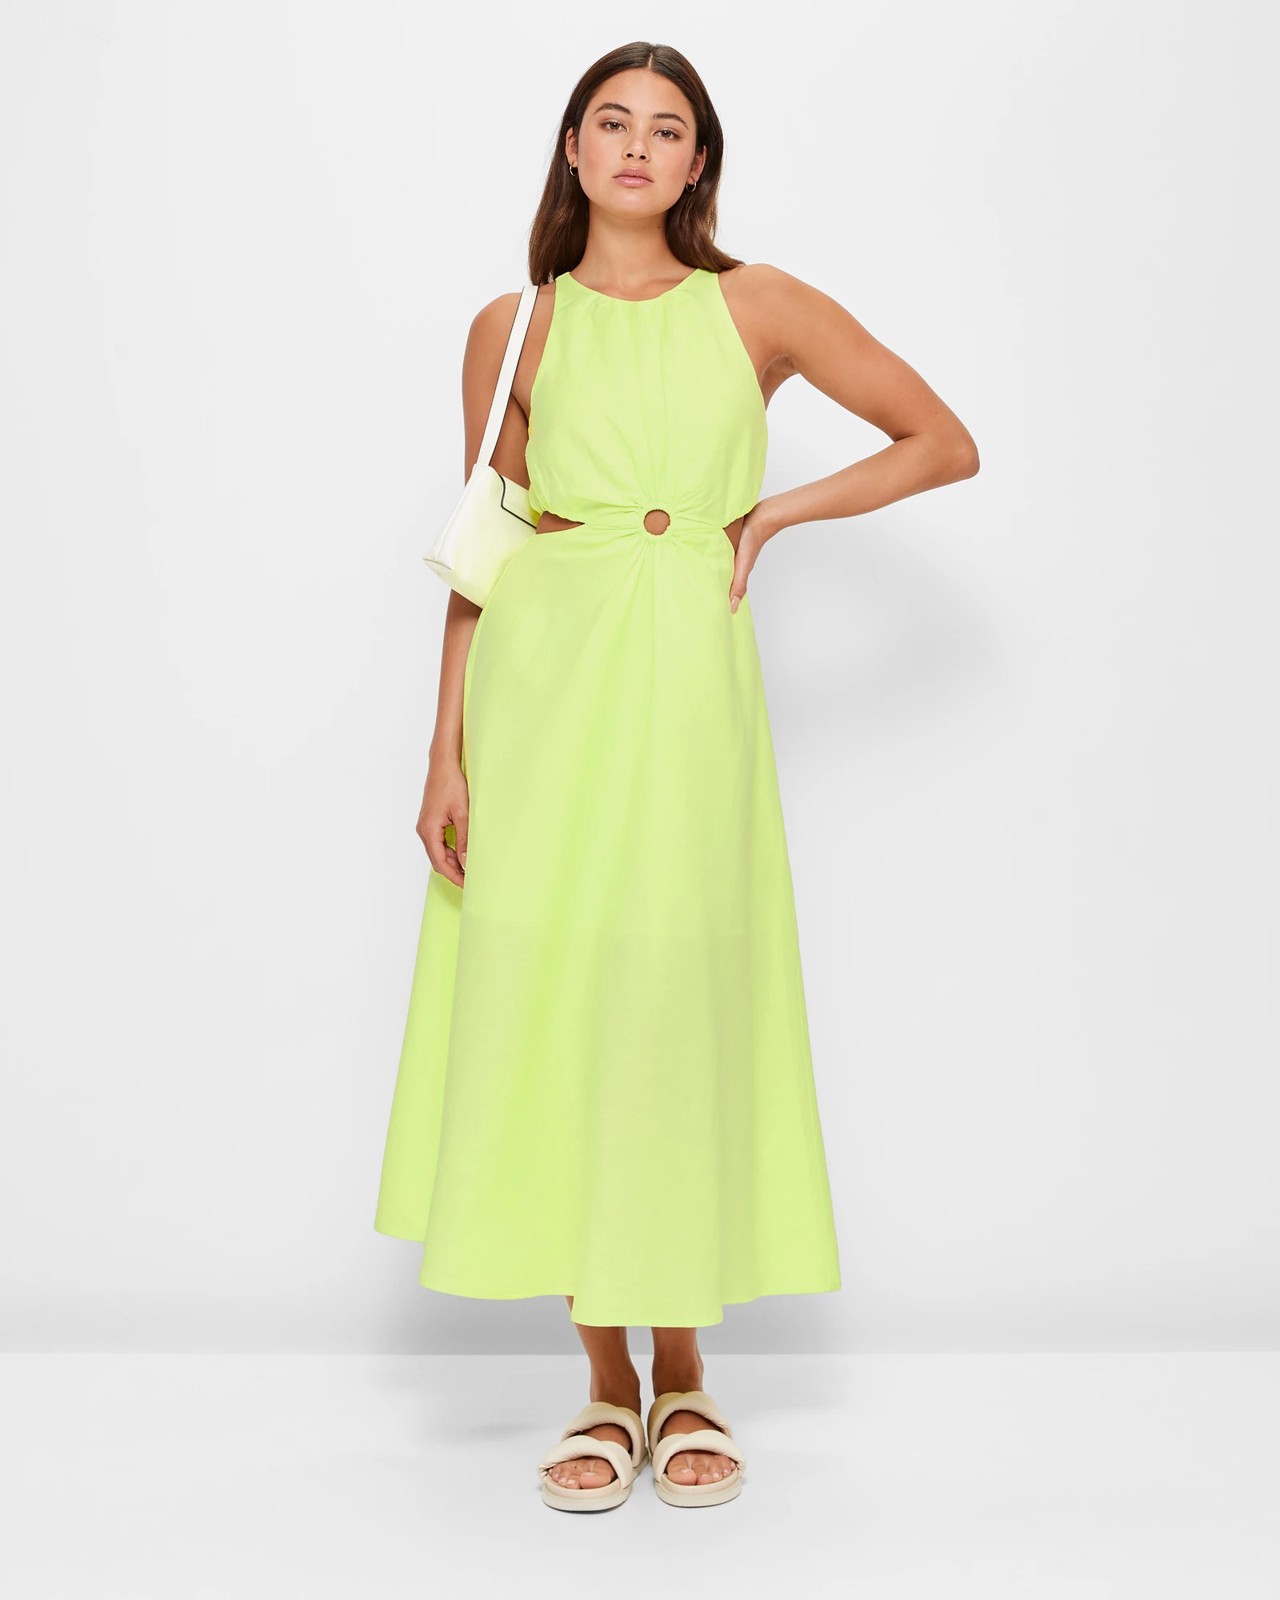 Linen Dresses Australia – LINEN WITH LUV